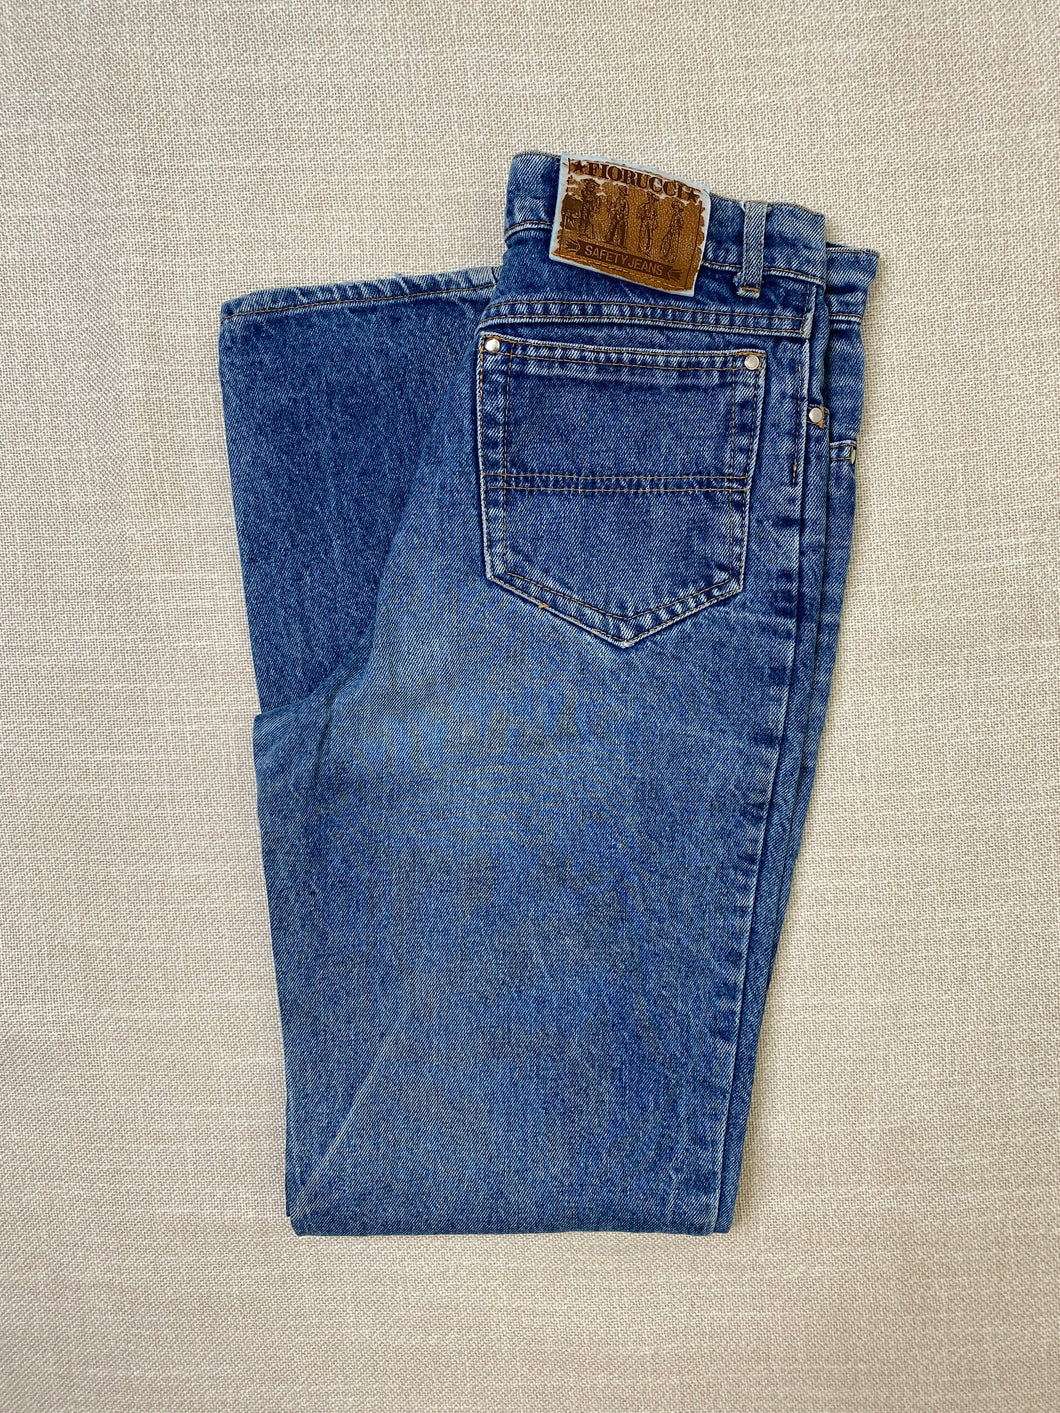 1980s Fiorucci mom jeans high waist